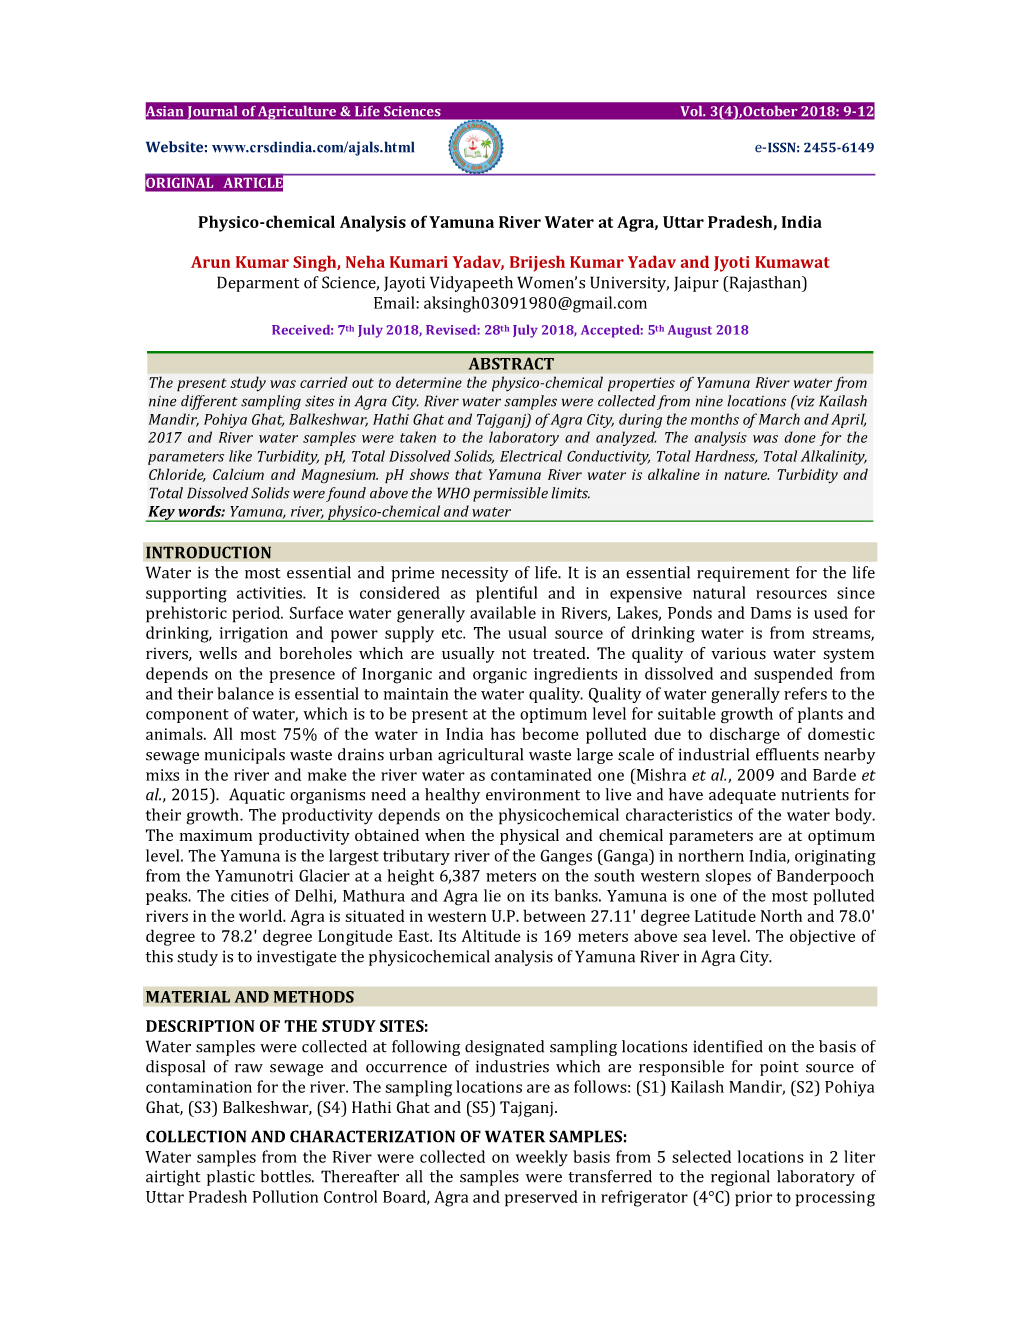 Physico-Chemical Analysis of Yamuna River Water at Agra, Uttar Pradesh, India Arun Kumar Singh, Neha Kumari Yadav, Brijesh Kumar